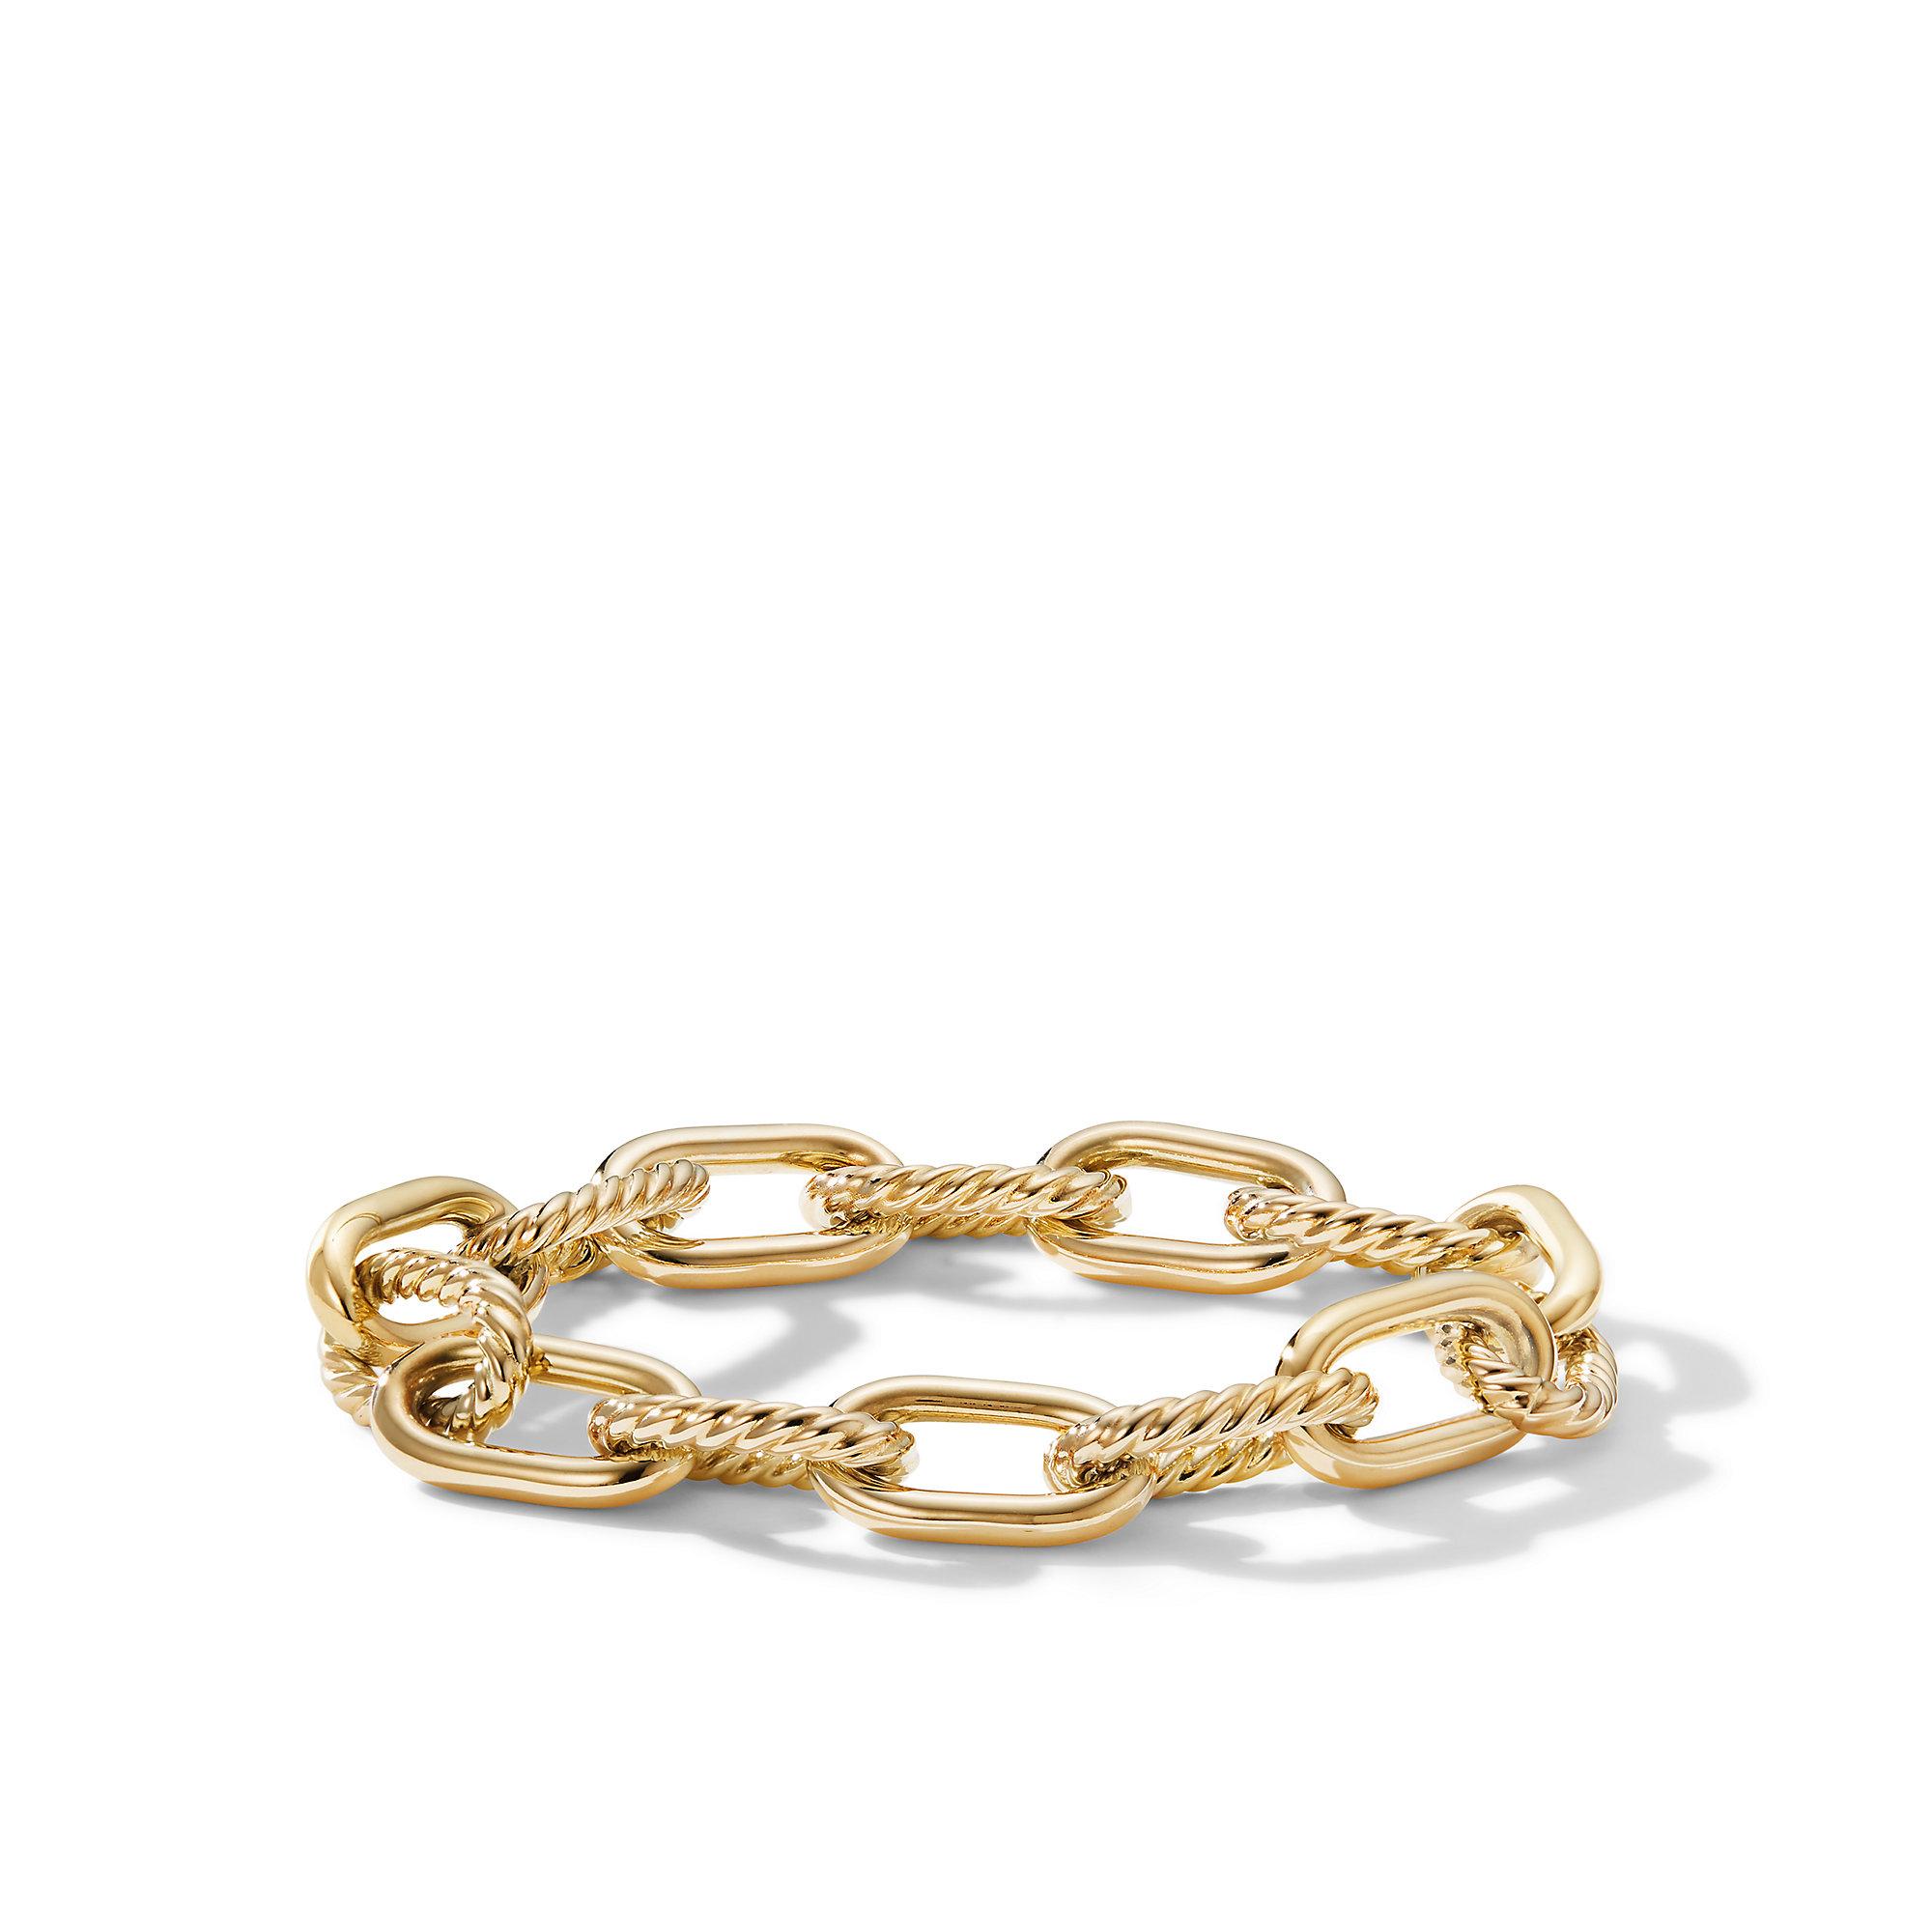 David Yurman DY Madison Chain Link Bracelet in 18k Yellow Gold